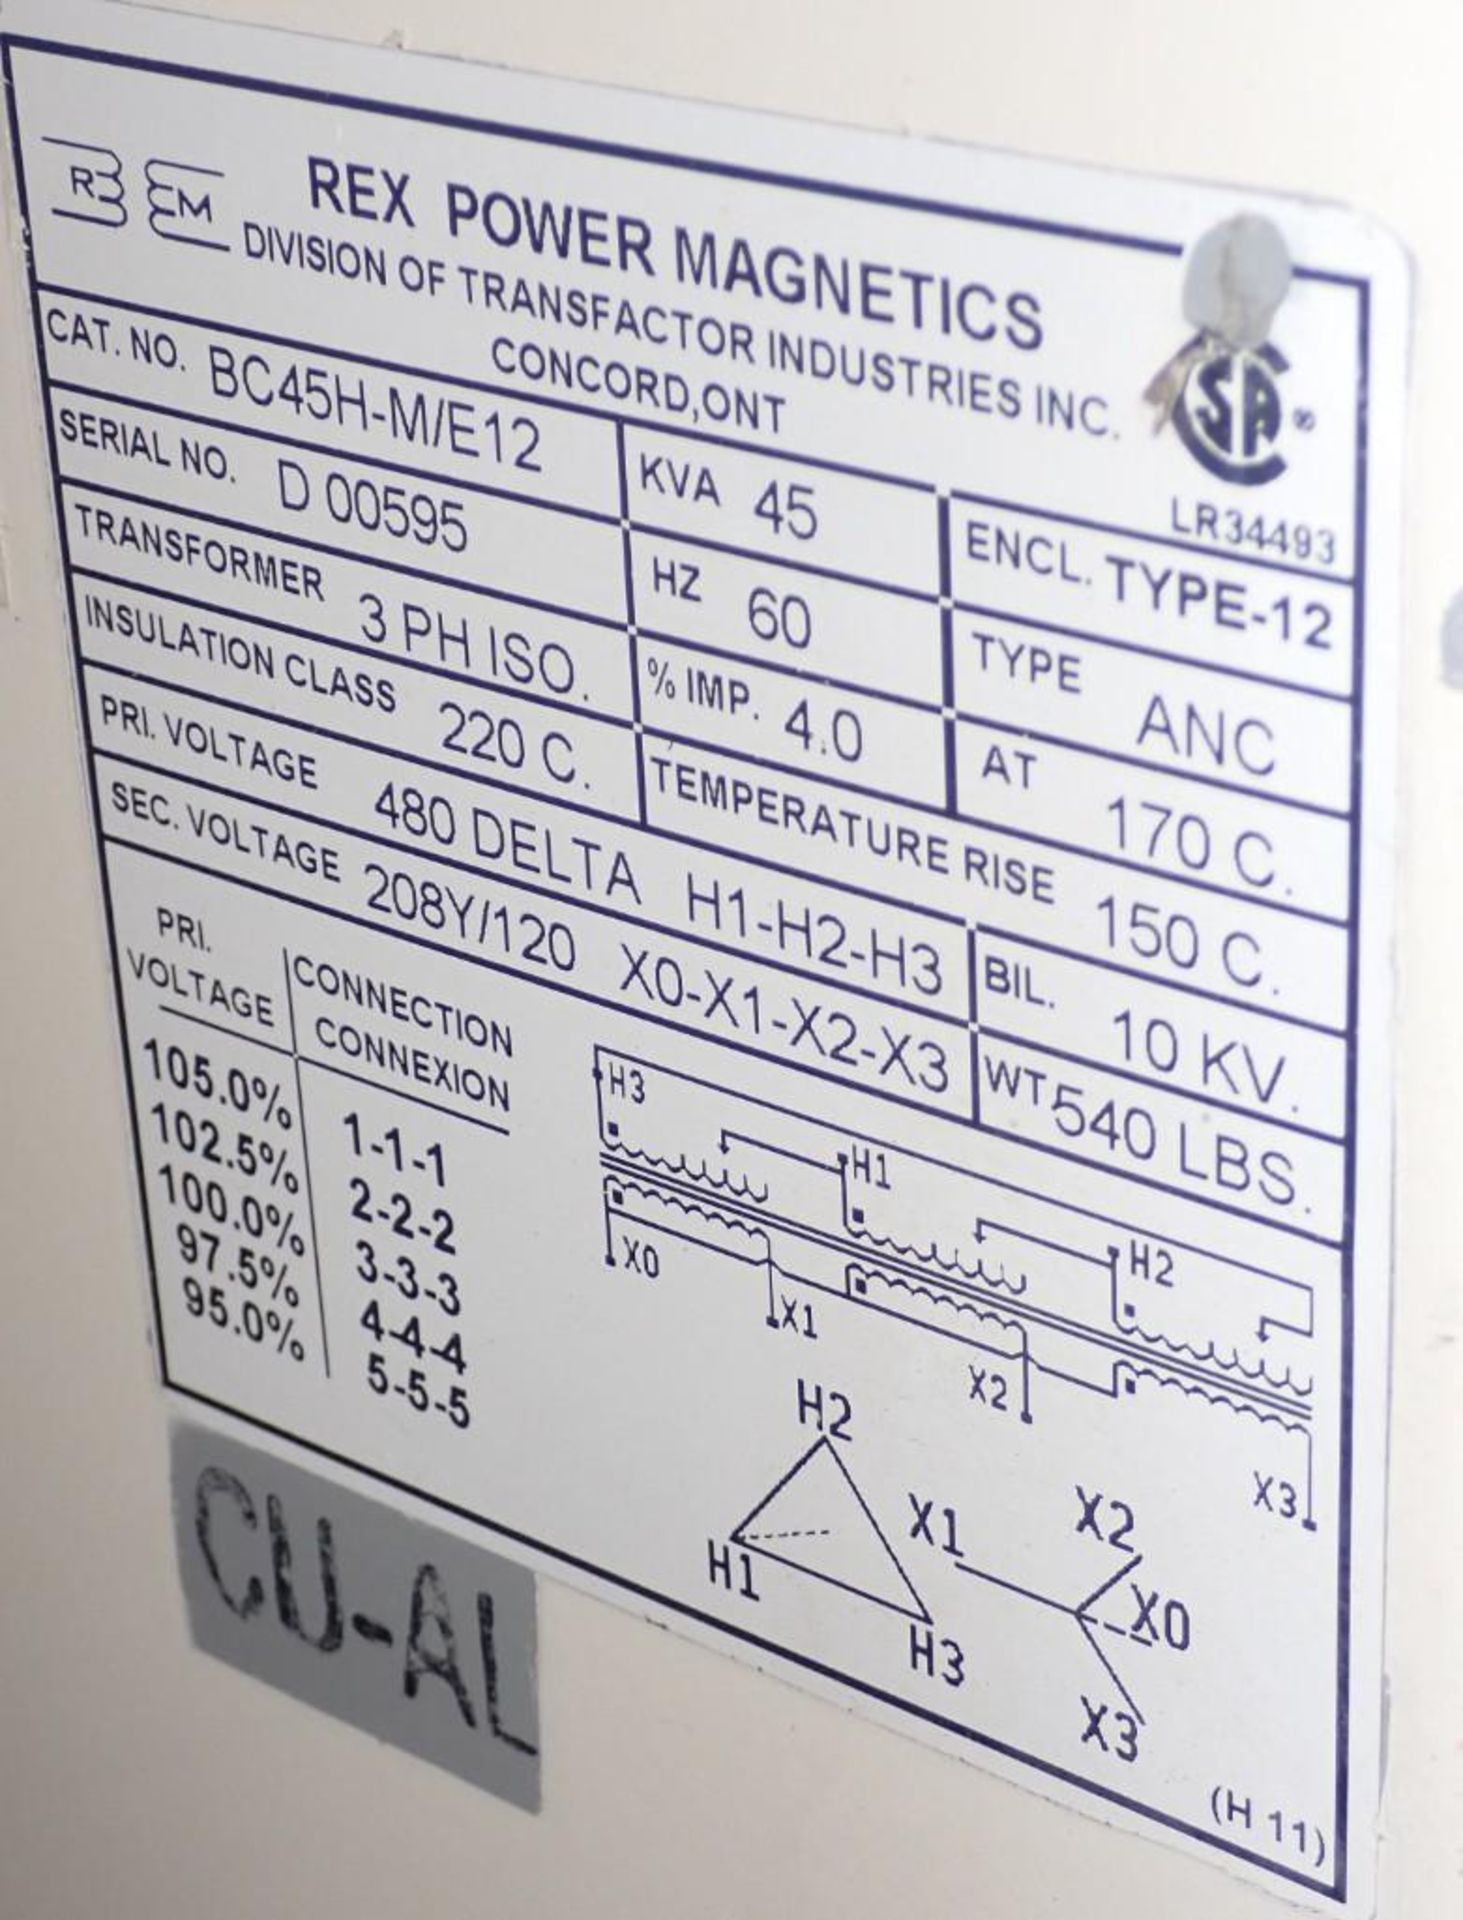 45 KVA Rex Power Magnetics #BC45H-M/E-12 Transformer - Image 4 of 4